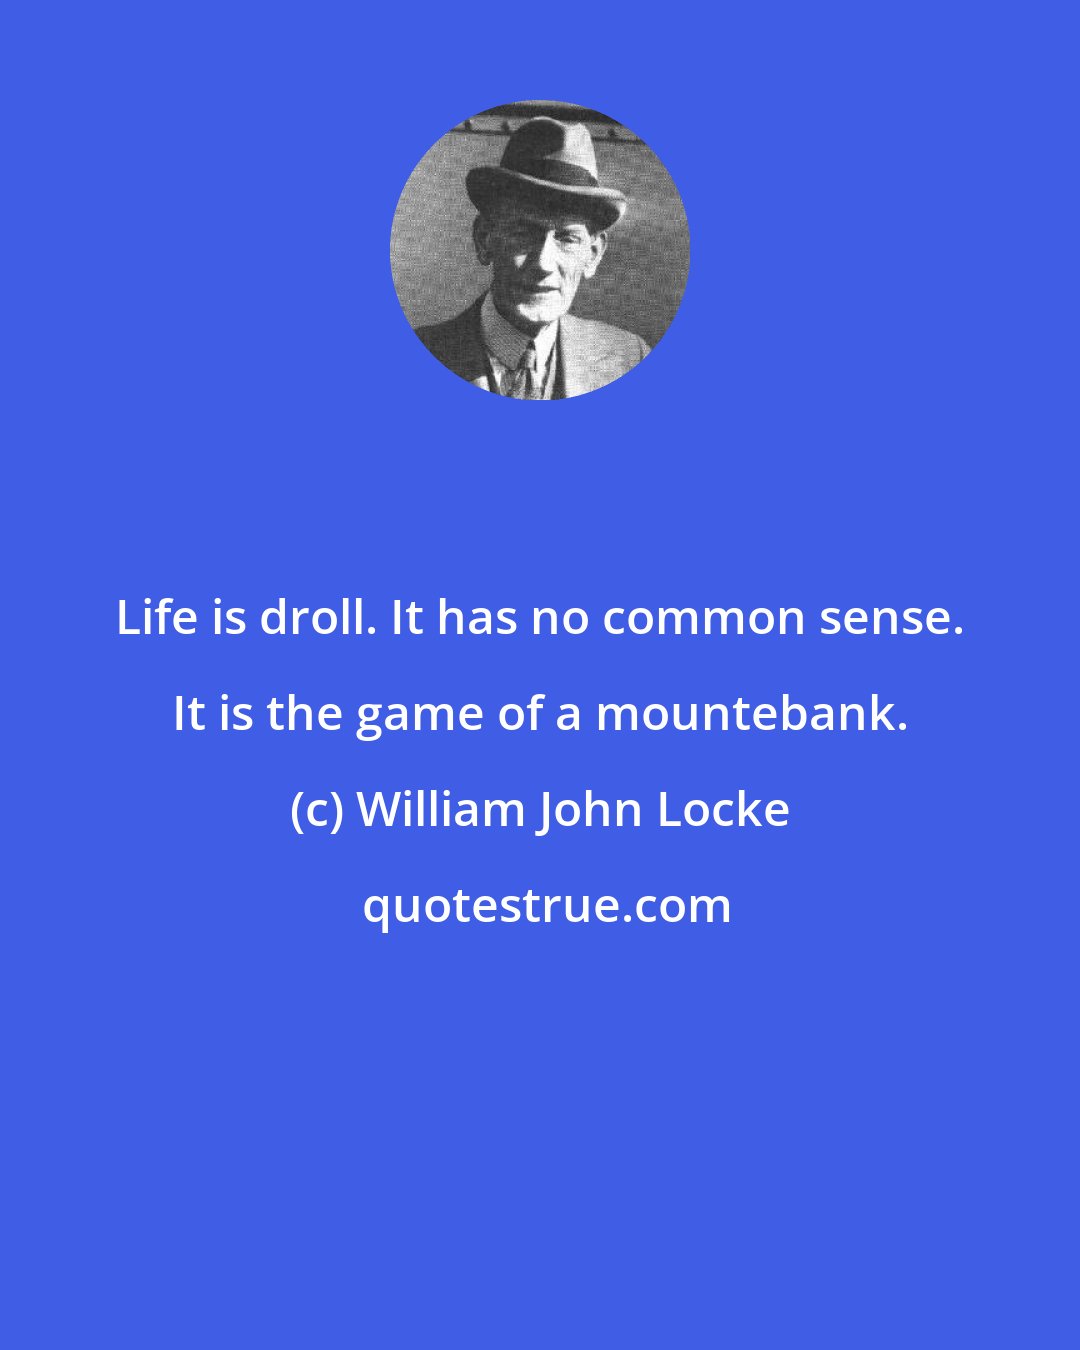 William John Locke: Life is droll. It has no common sense. It is the game of a mountebank.